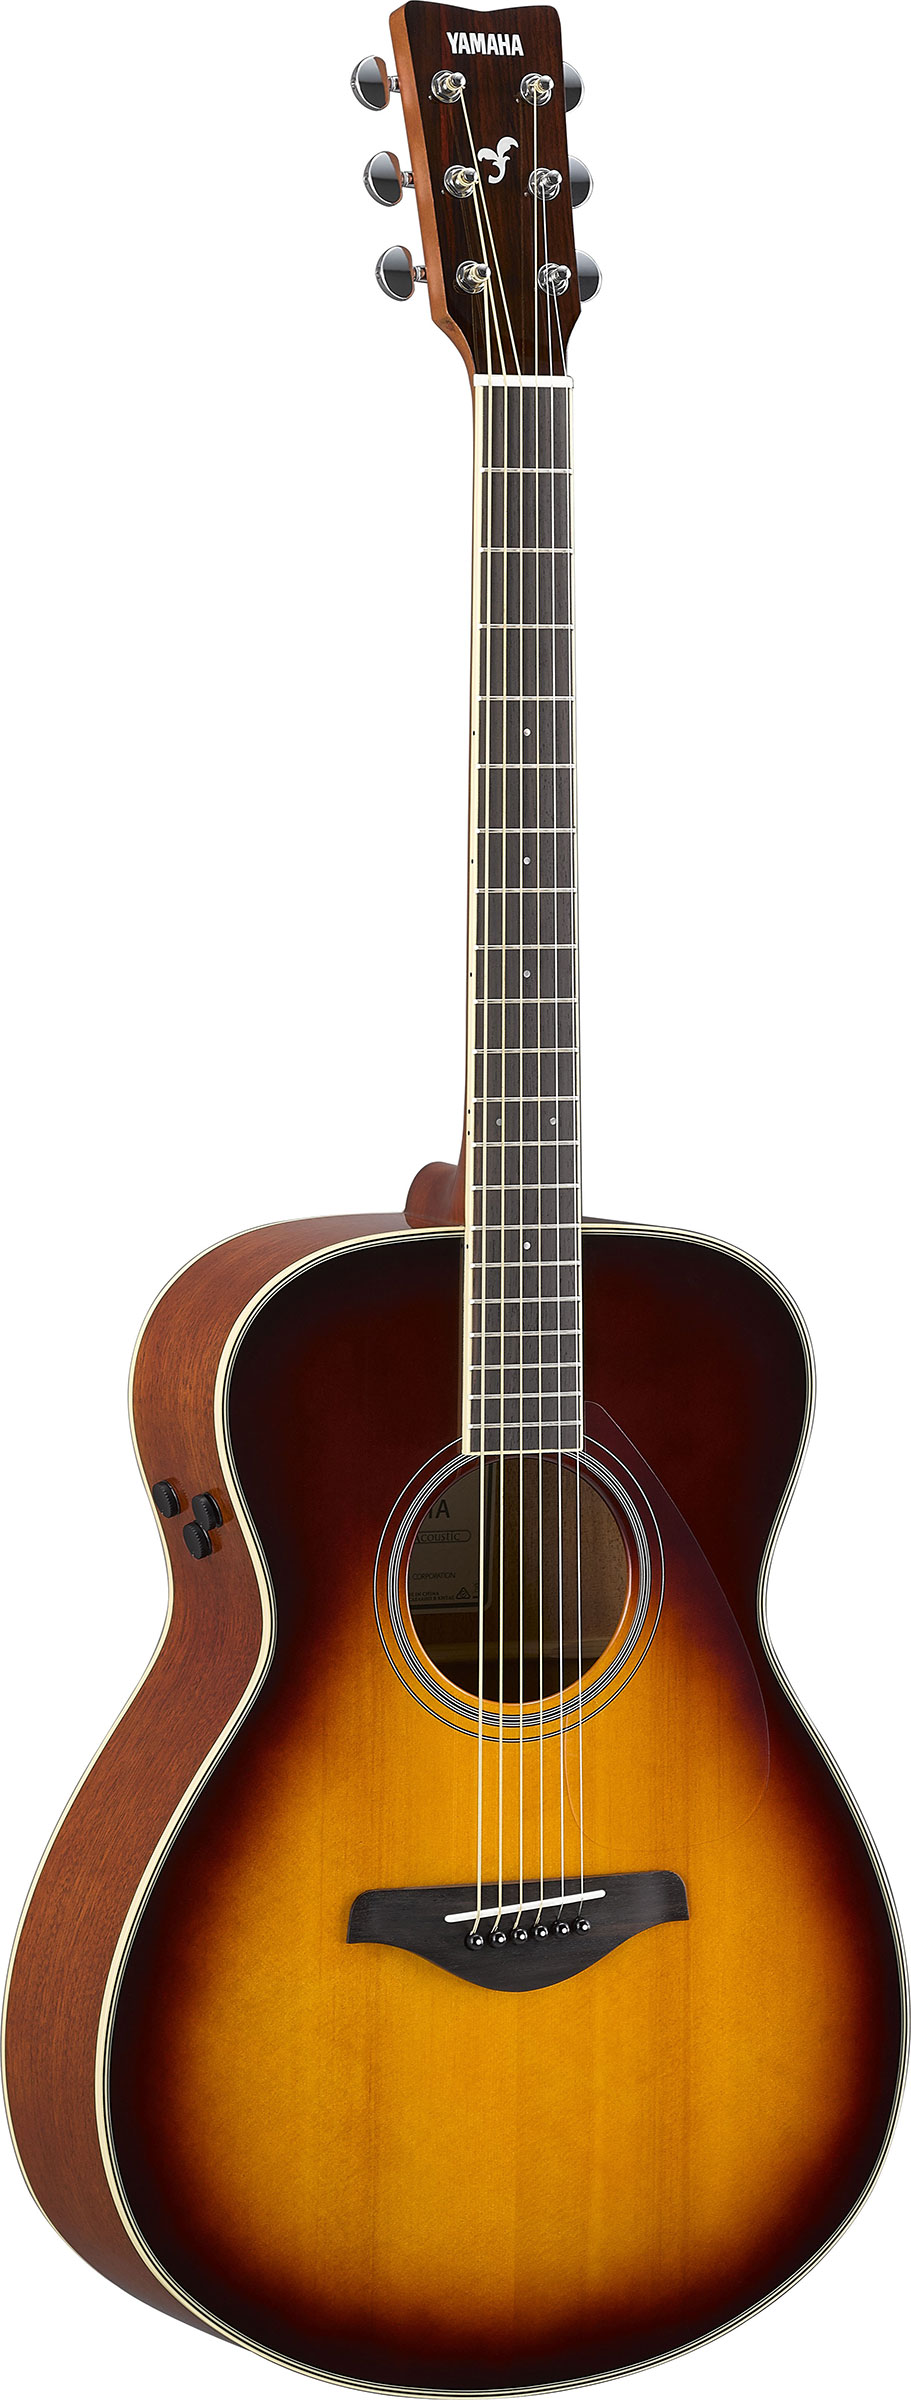 An image of Yamaha FS-TA Acoustic Guitar Brown Sunburst